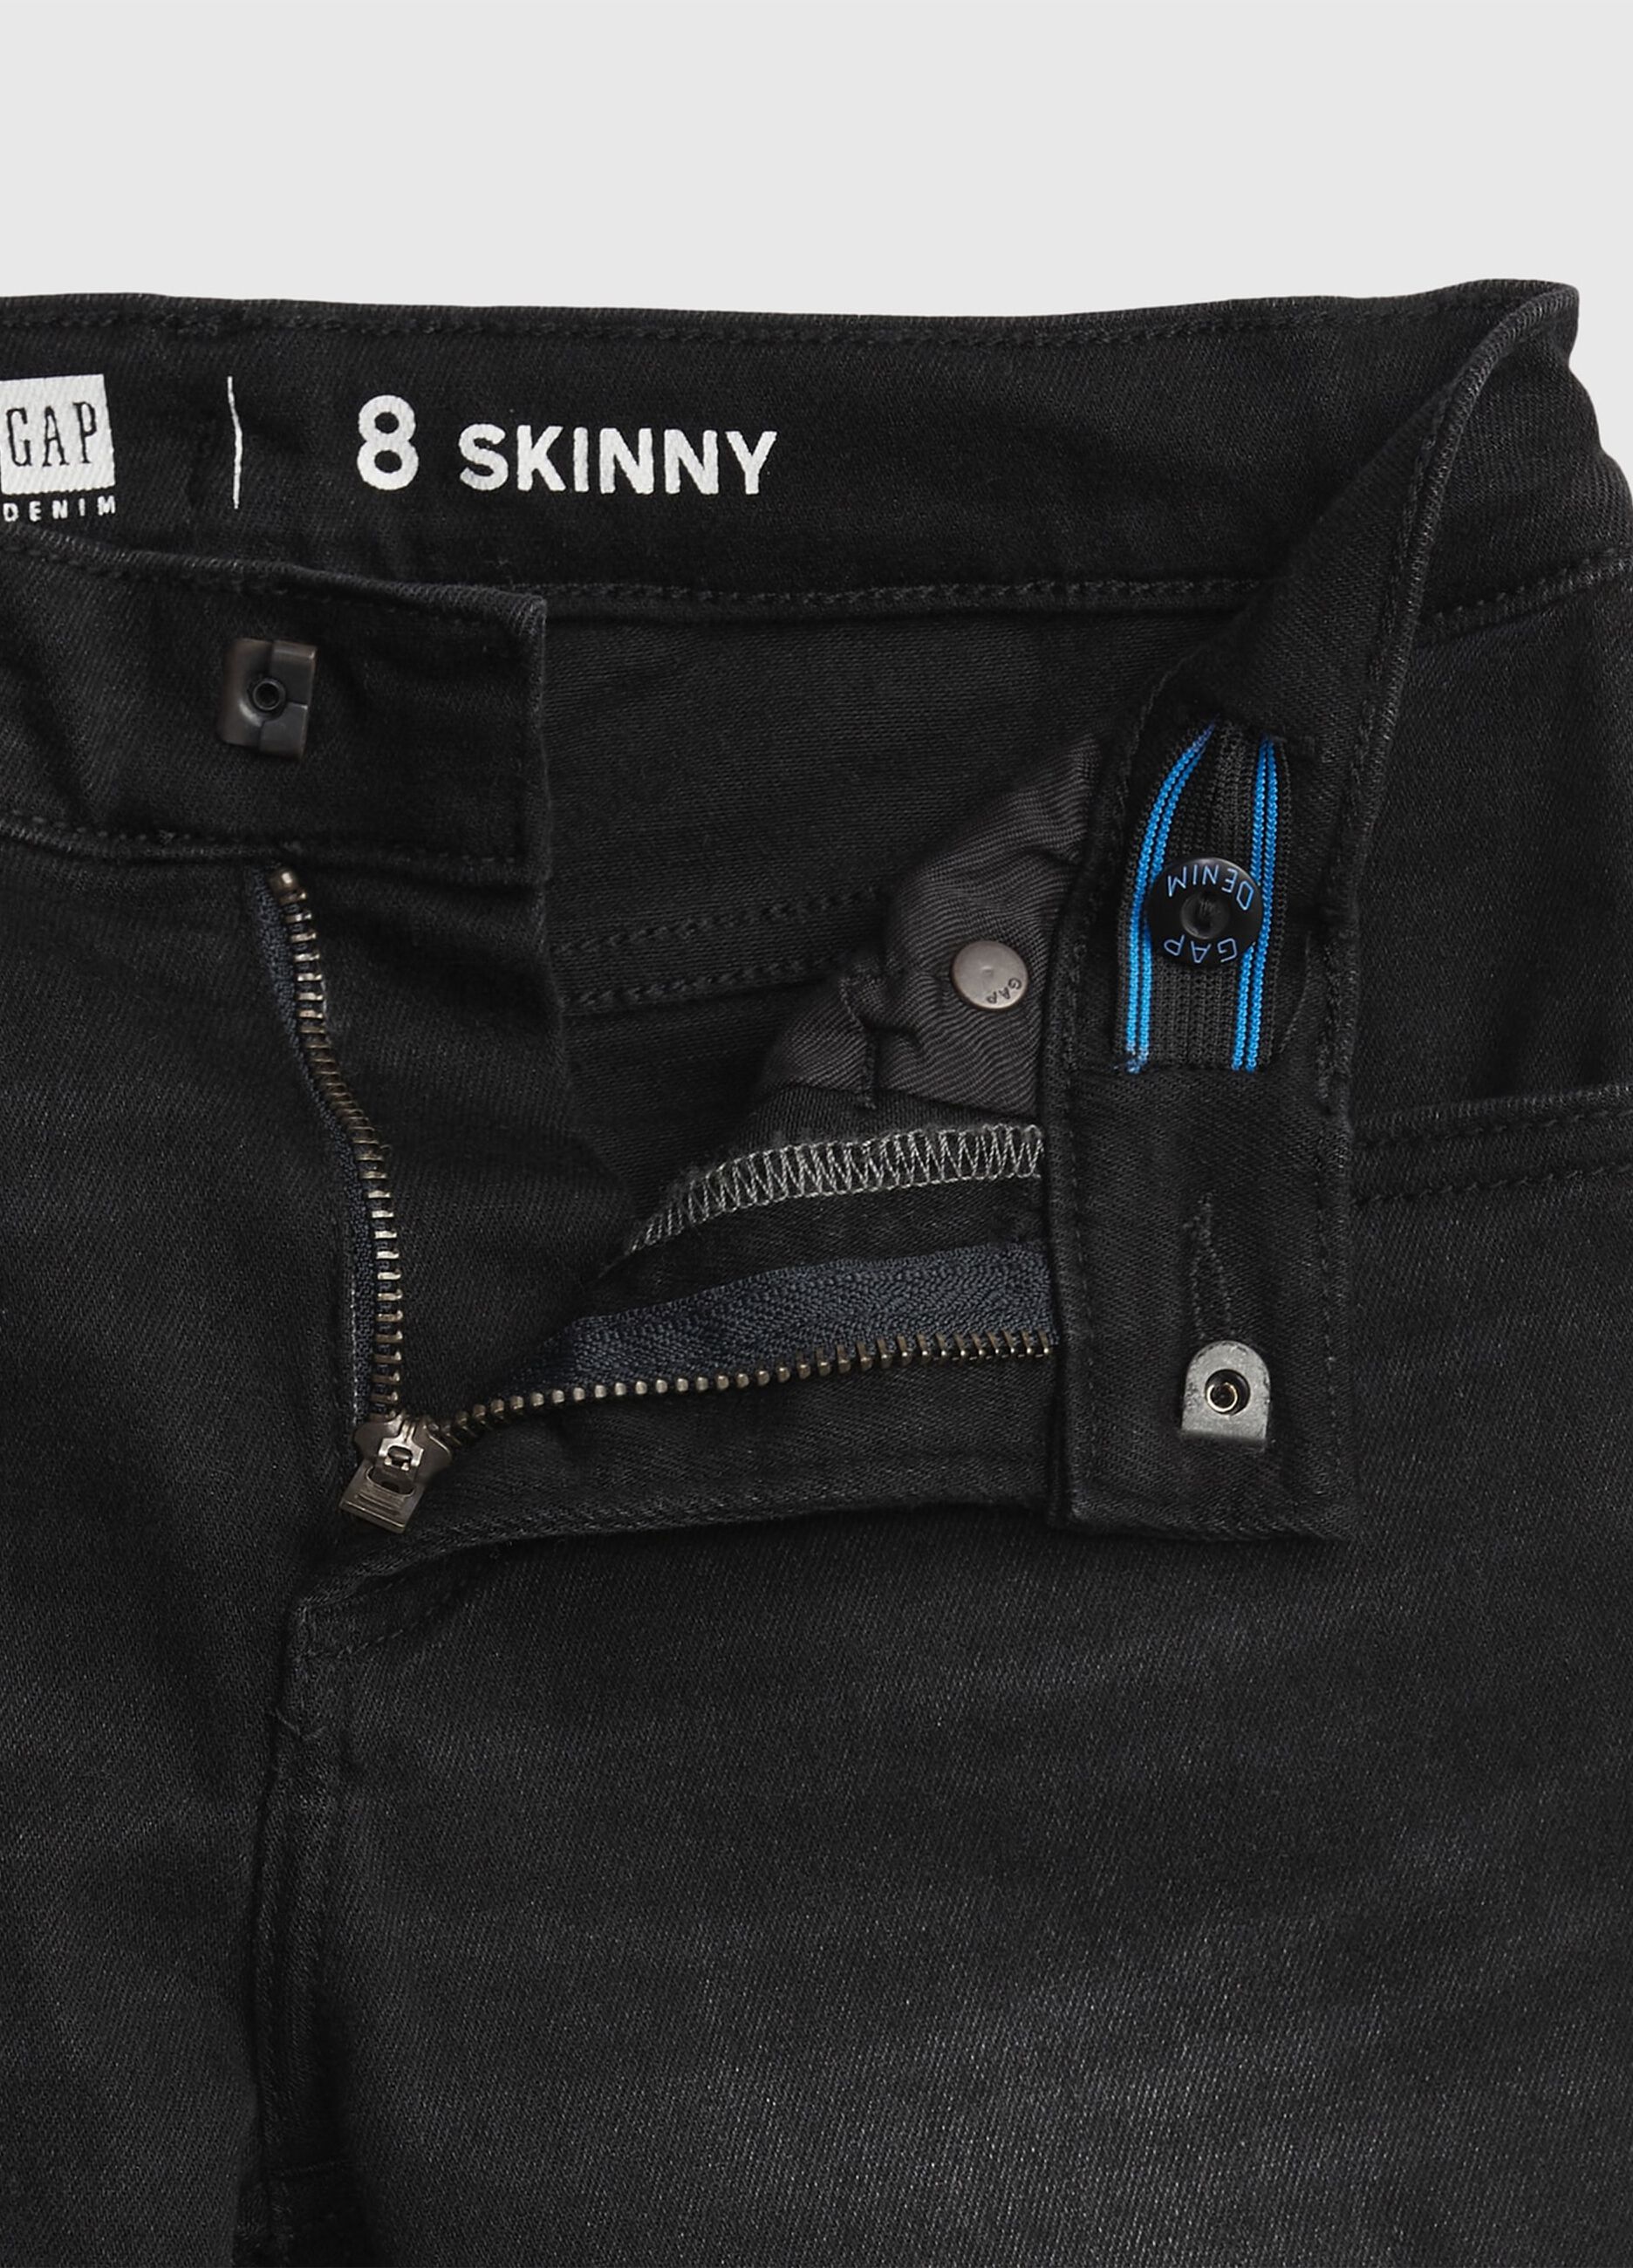 Jeans skinny fit con abrasioni